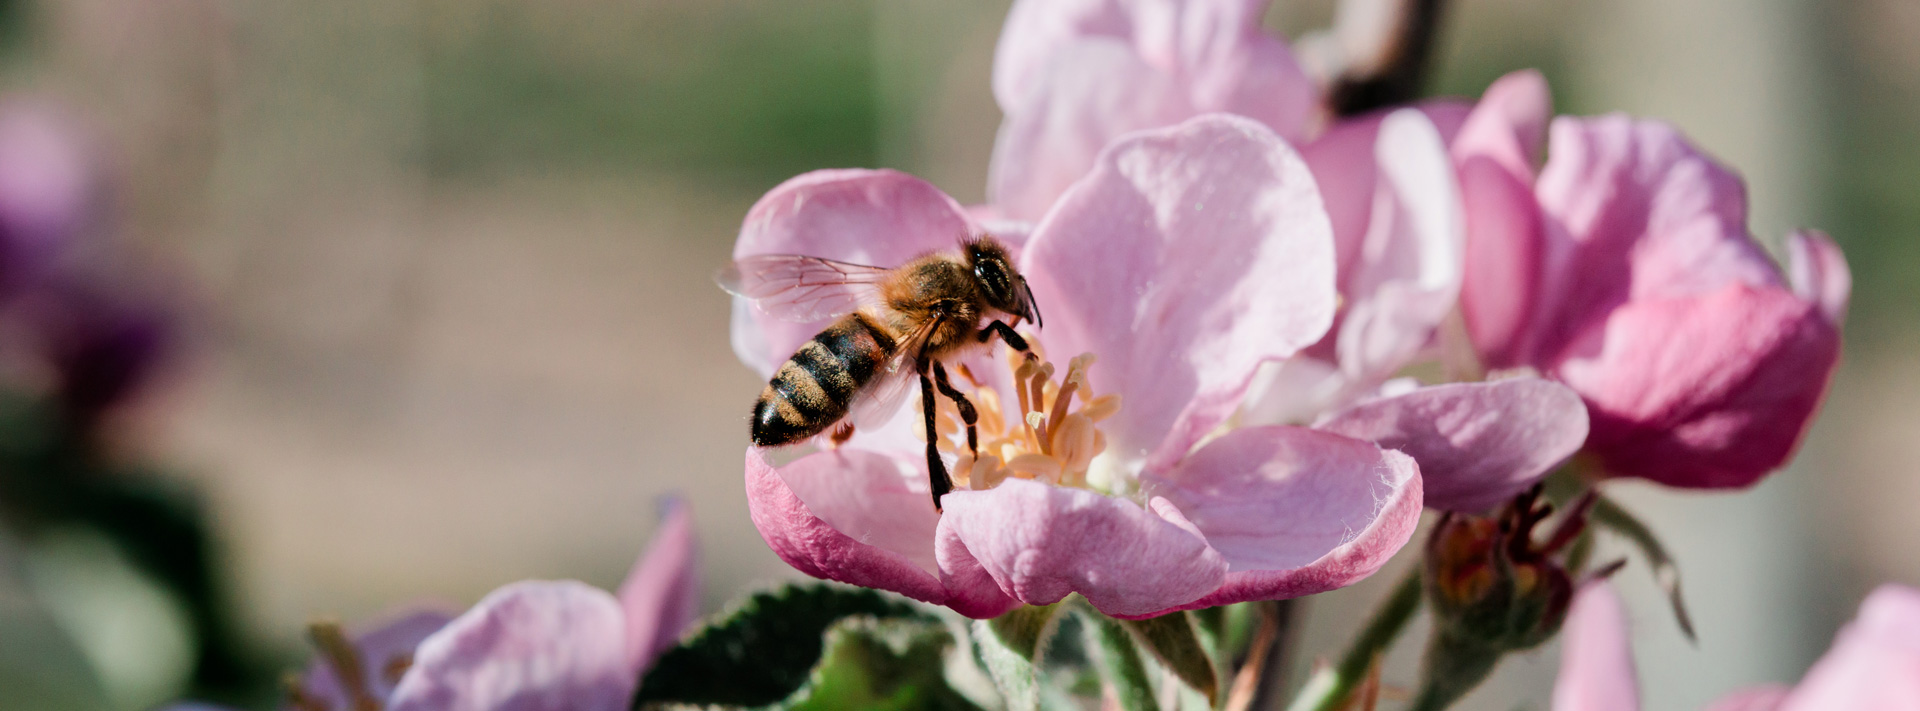 Honeybee on a Pink Flower Blossom